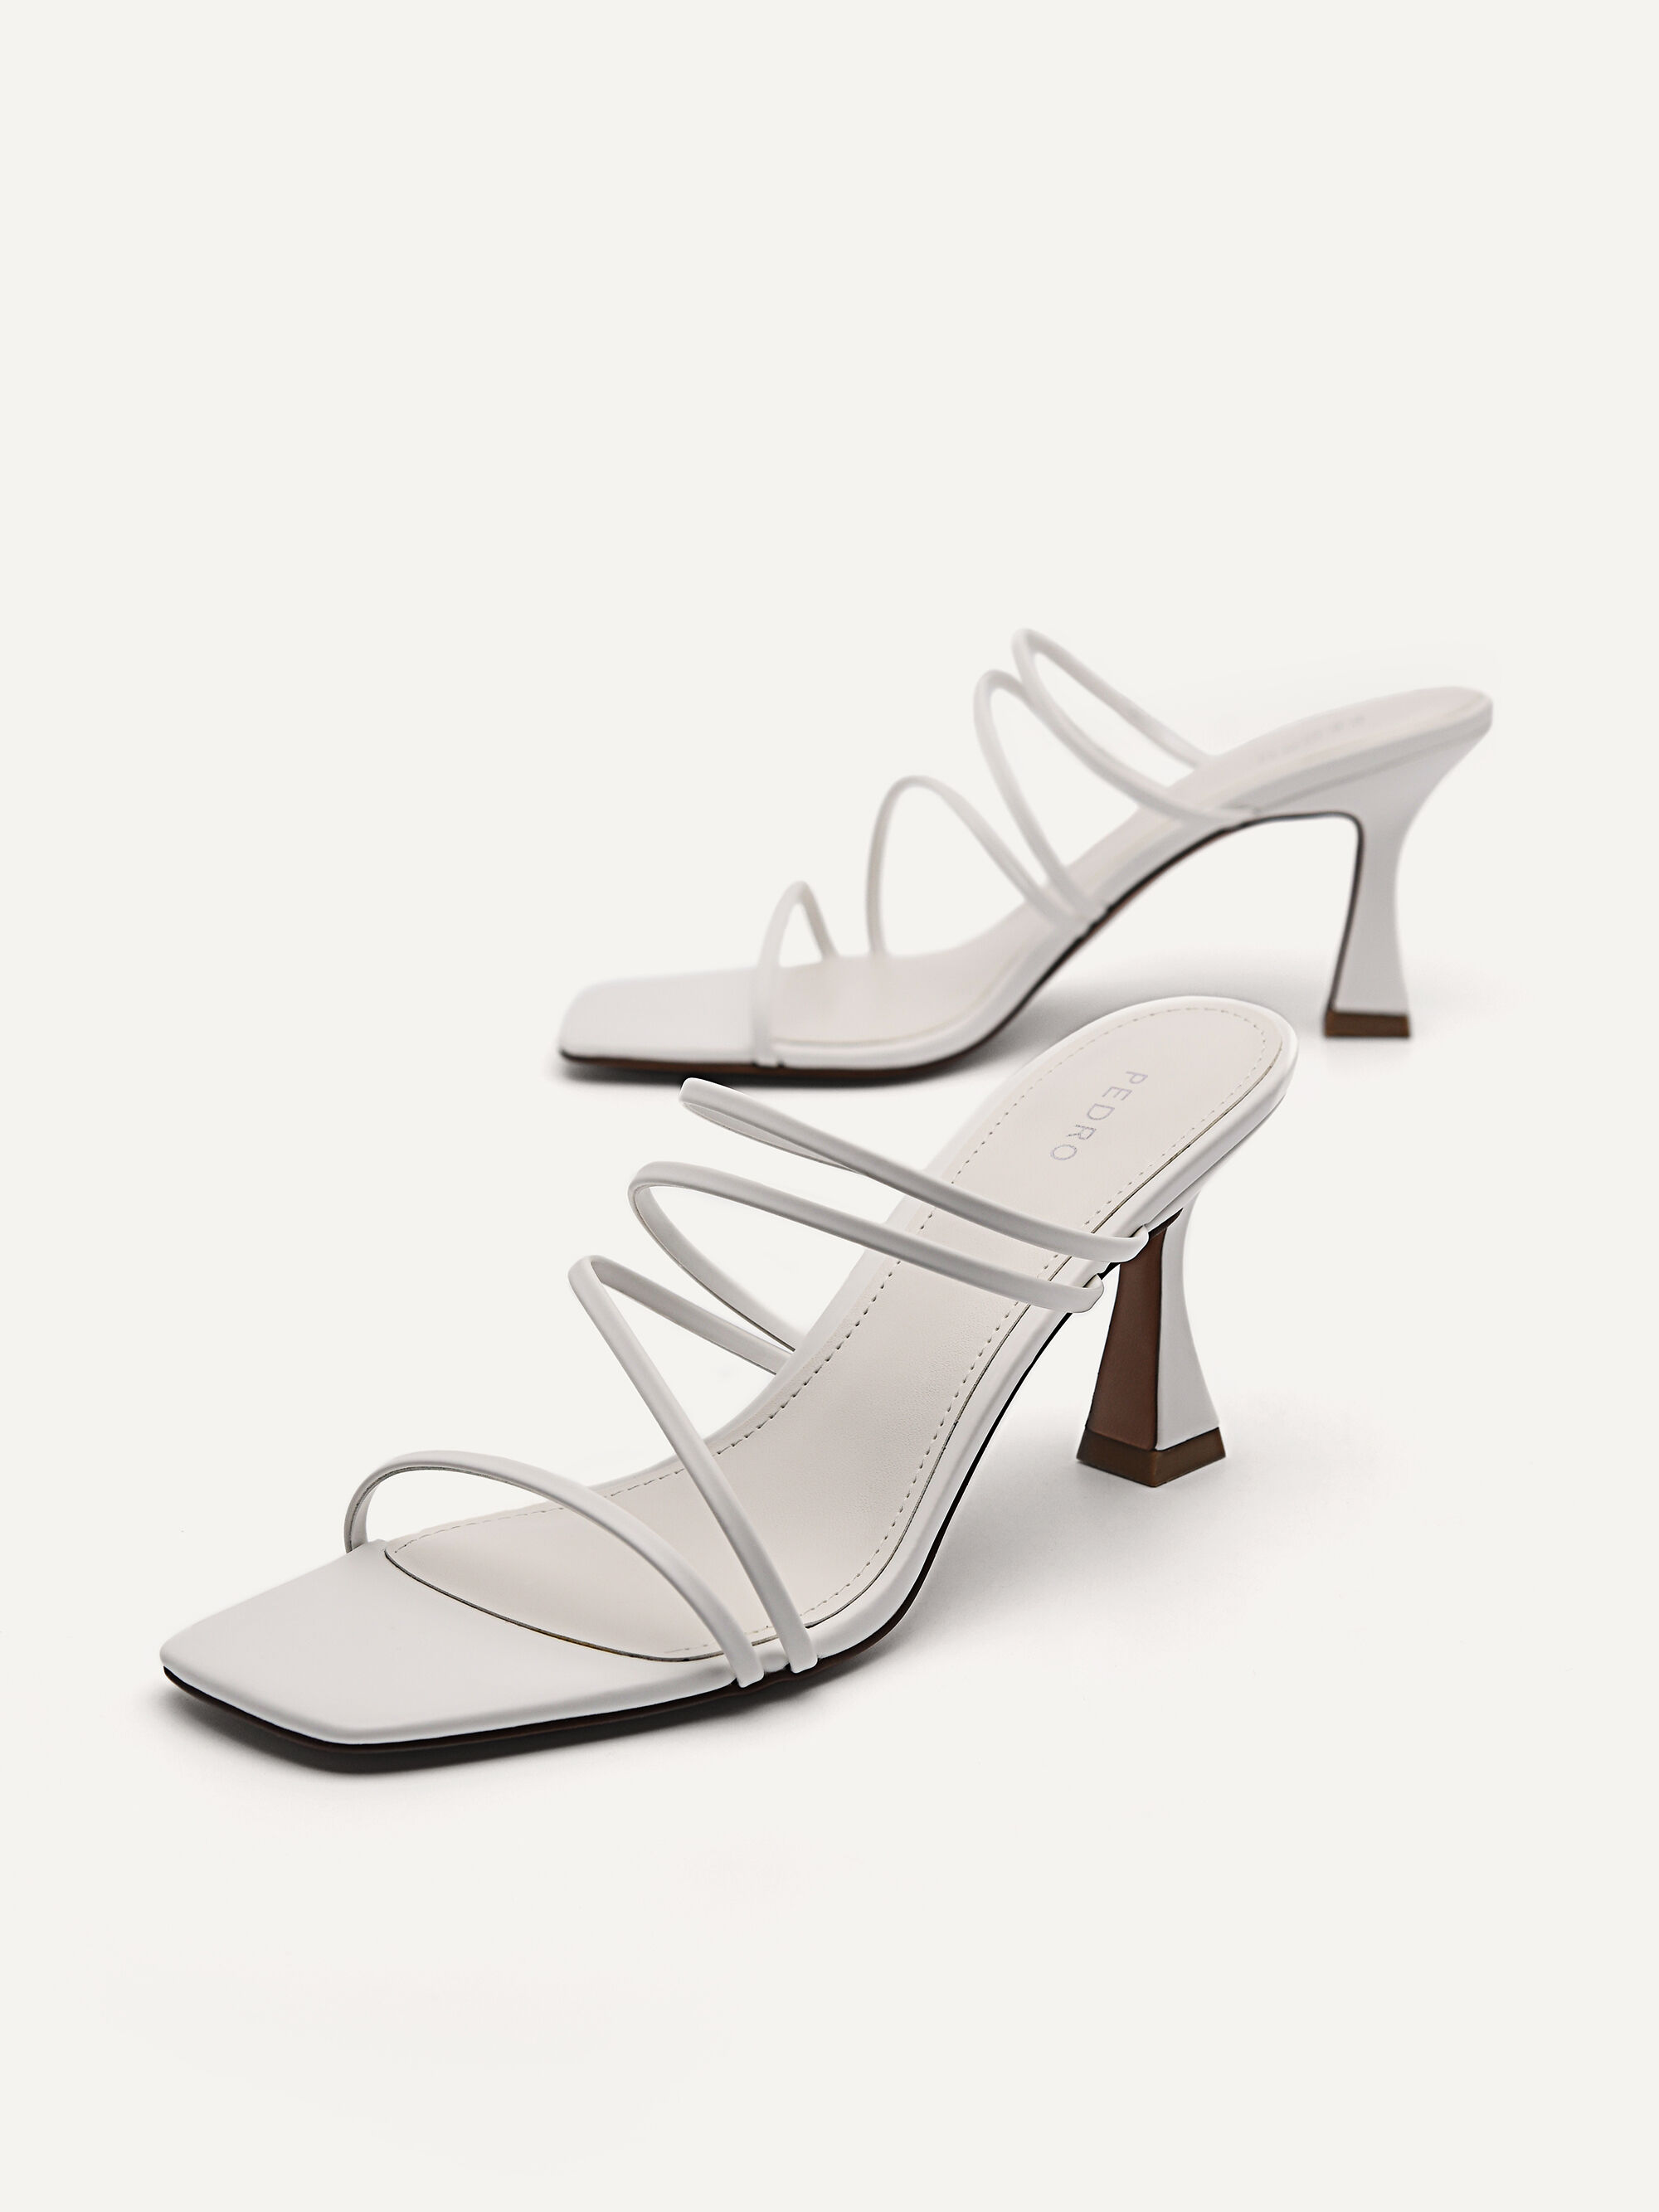 White Dress Sandals Medium Heel Sale Online | bellvalefarms.com